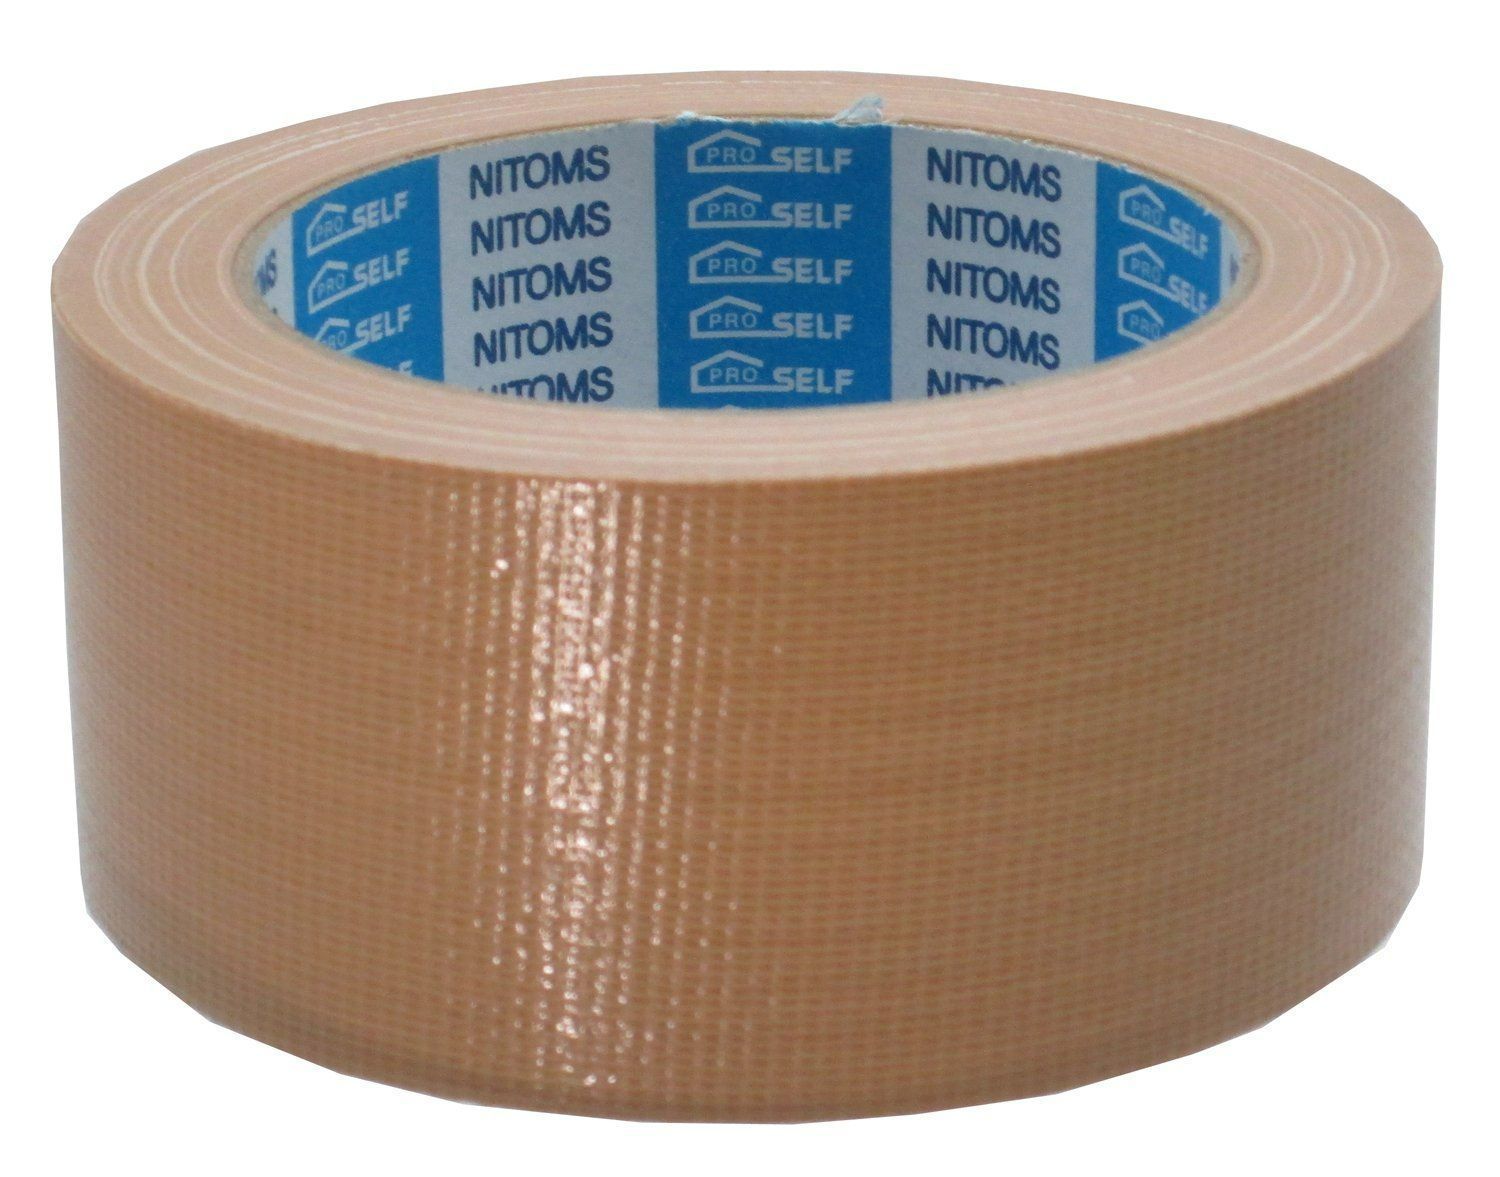 Nitto(ニトムズ) ガムテープ 布粘着テープ PK-30 ケース売り(30巻) 180μ×50mm×25m - 3